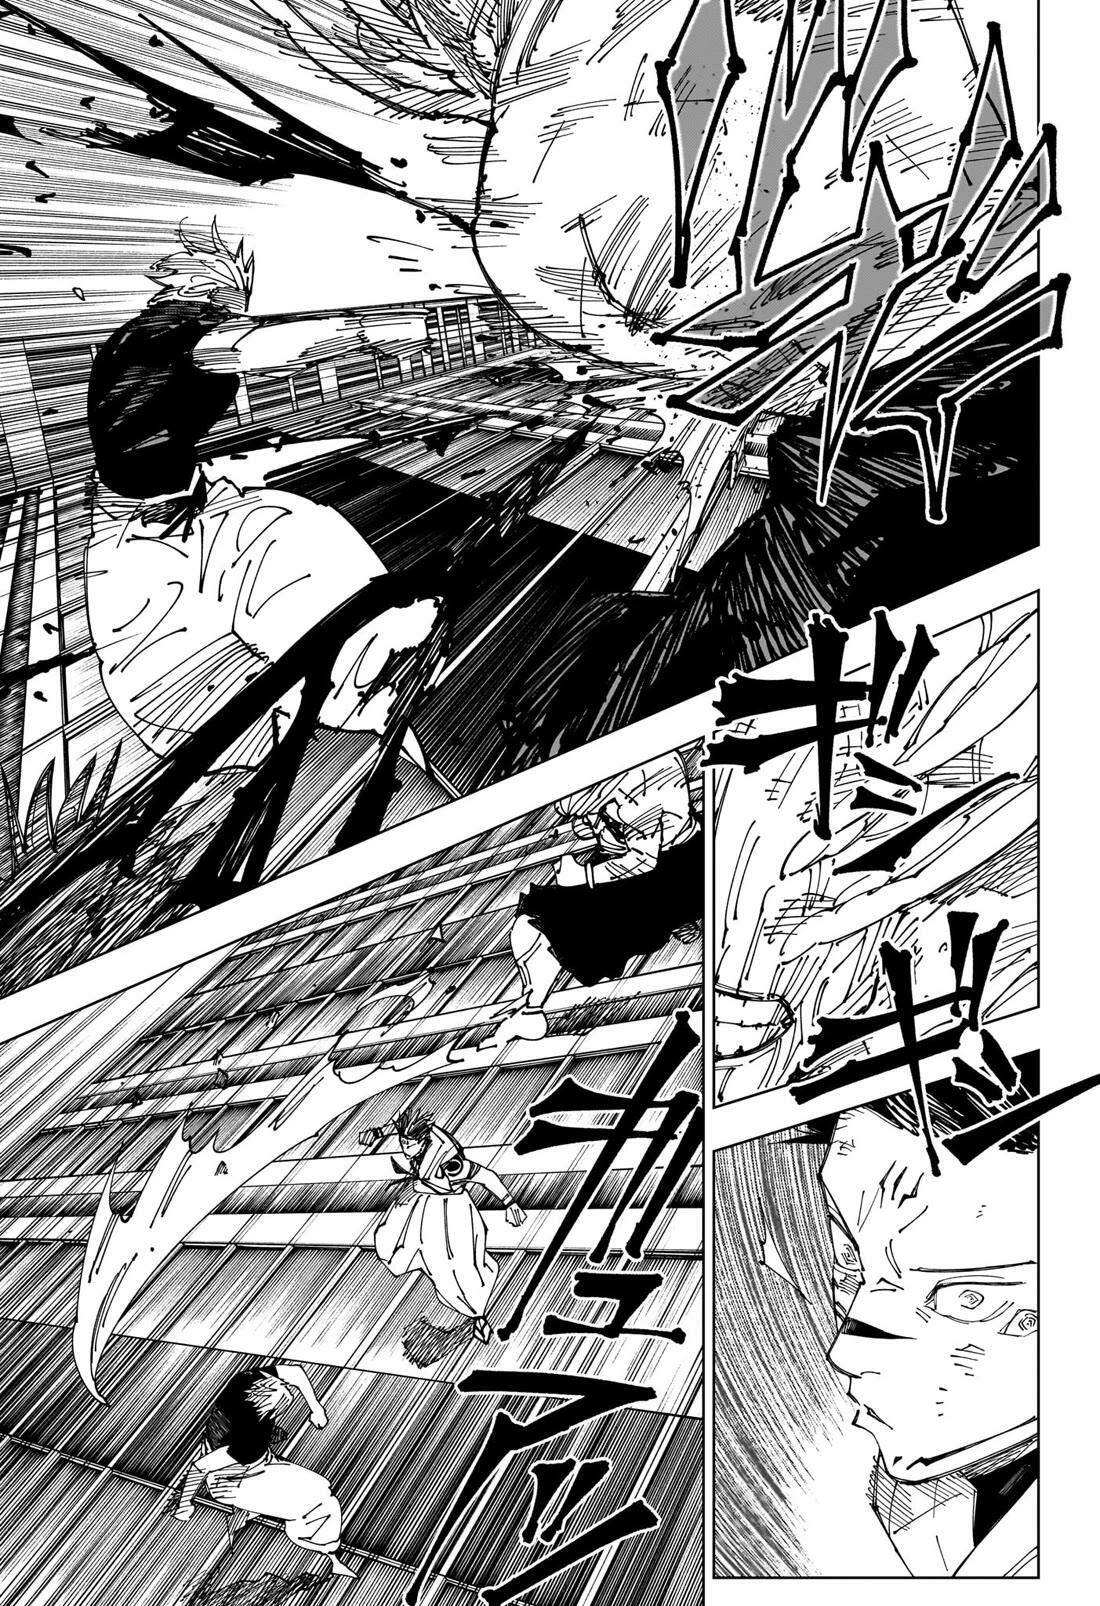 Jujutsu Kaisen Chapter 235: The Decisive Battle In The Uninhabited, Demon-Infested Shinjuku ⑬ page 4 - Mangakakalot